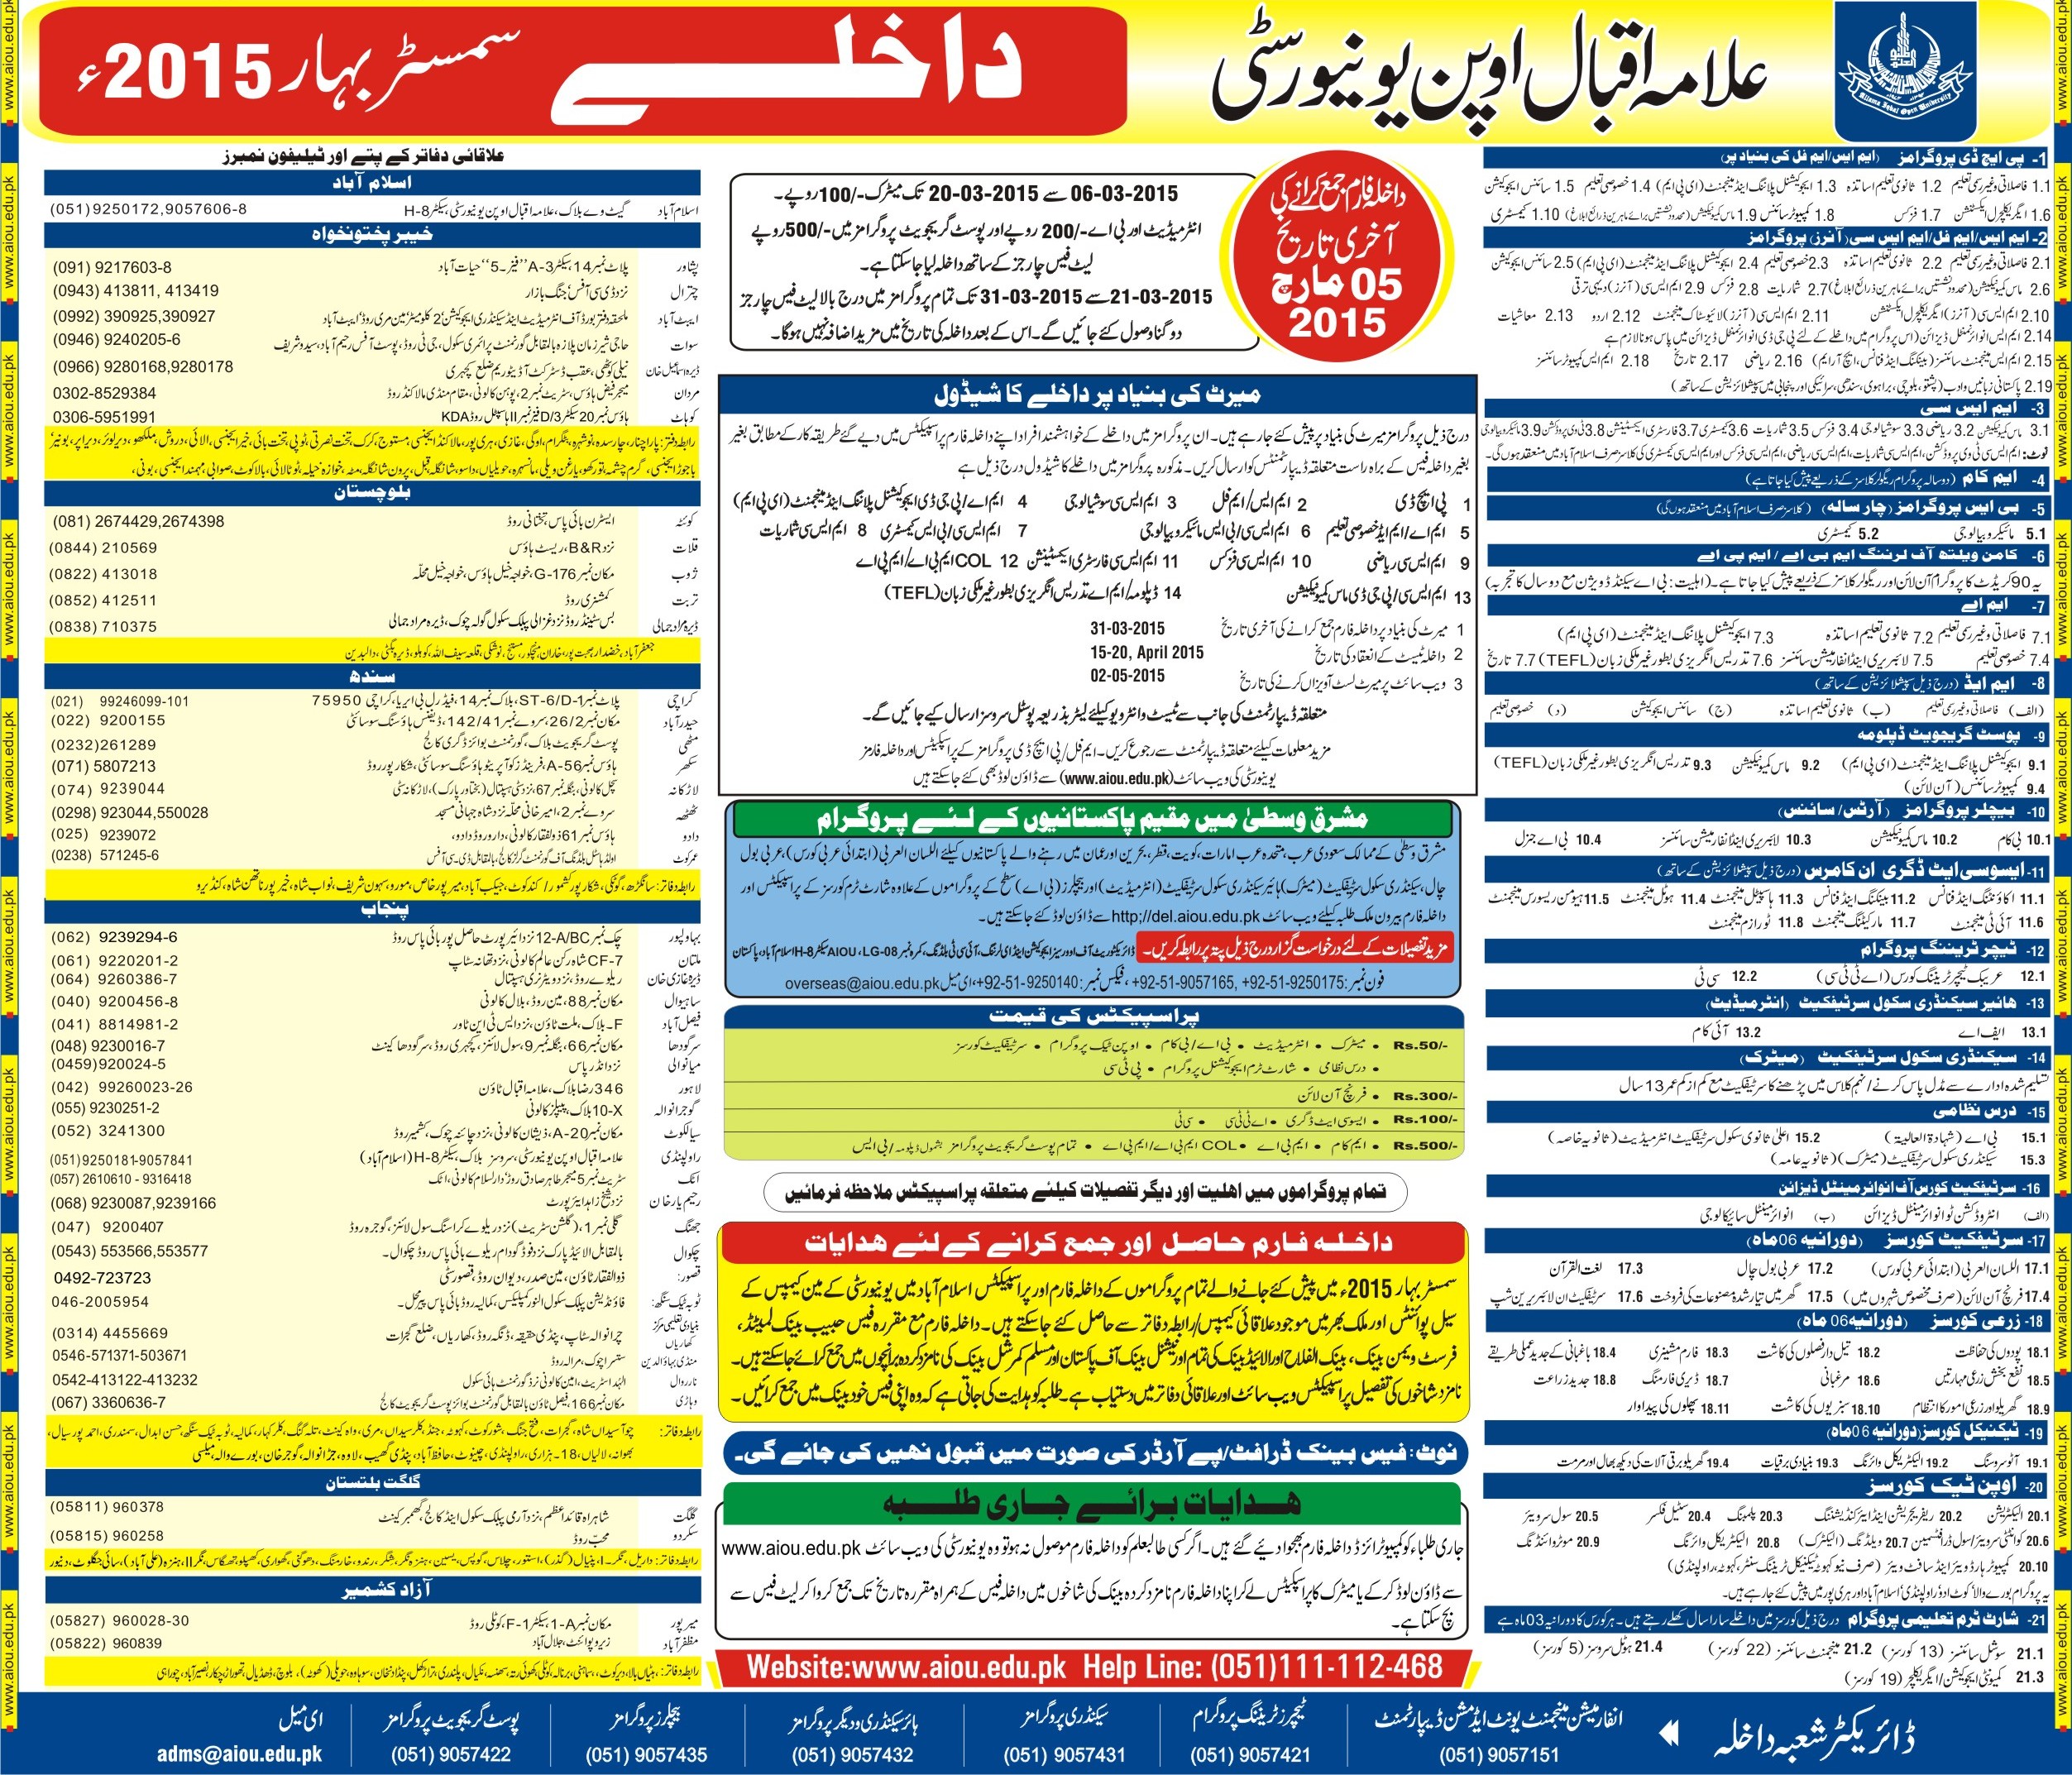 Allama Iqbal Open University announces Spring Admissions 2015